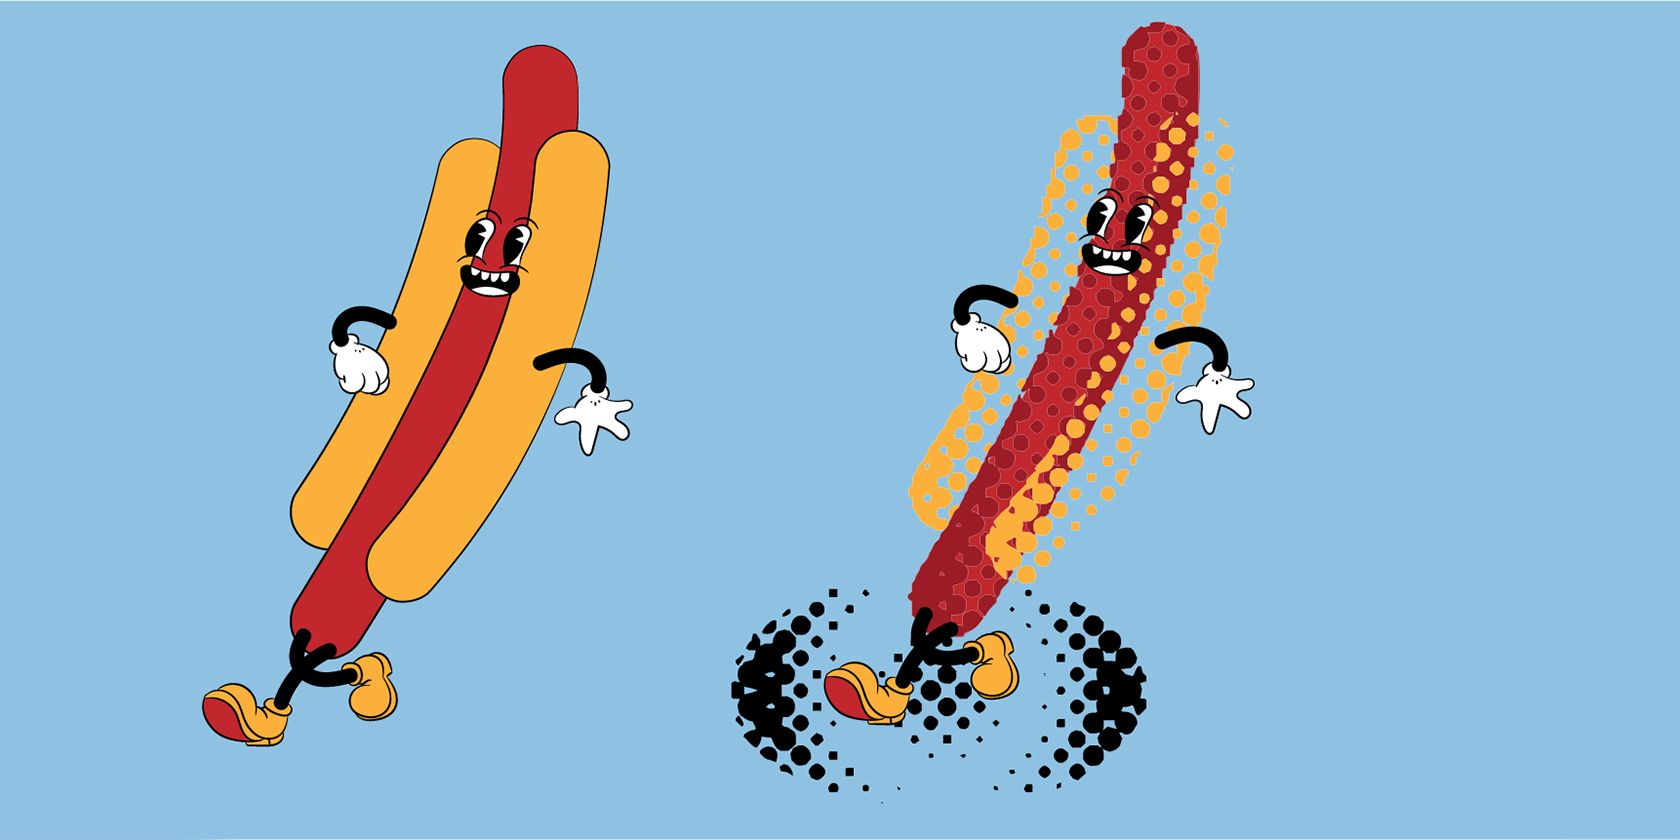 Hot dog illustrations in halftone